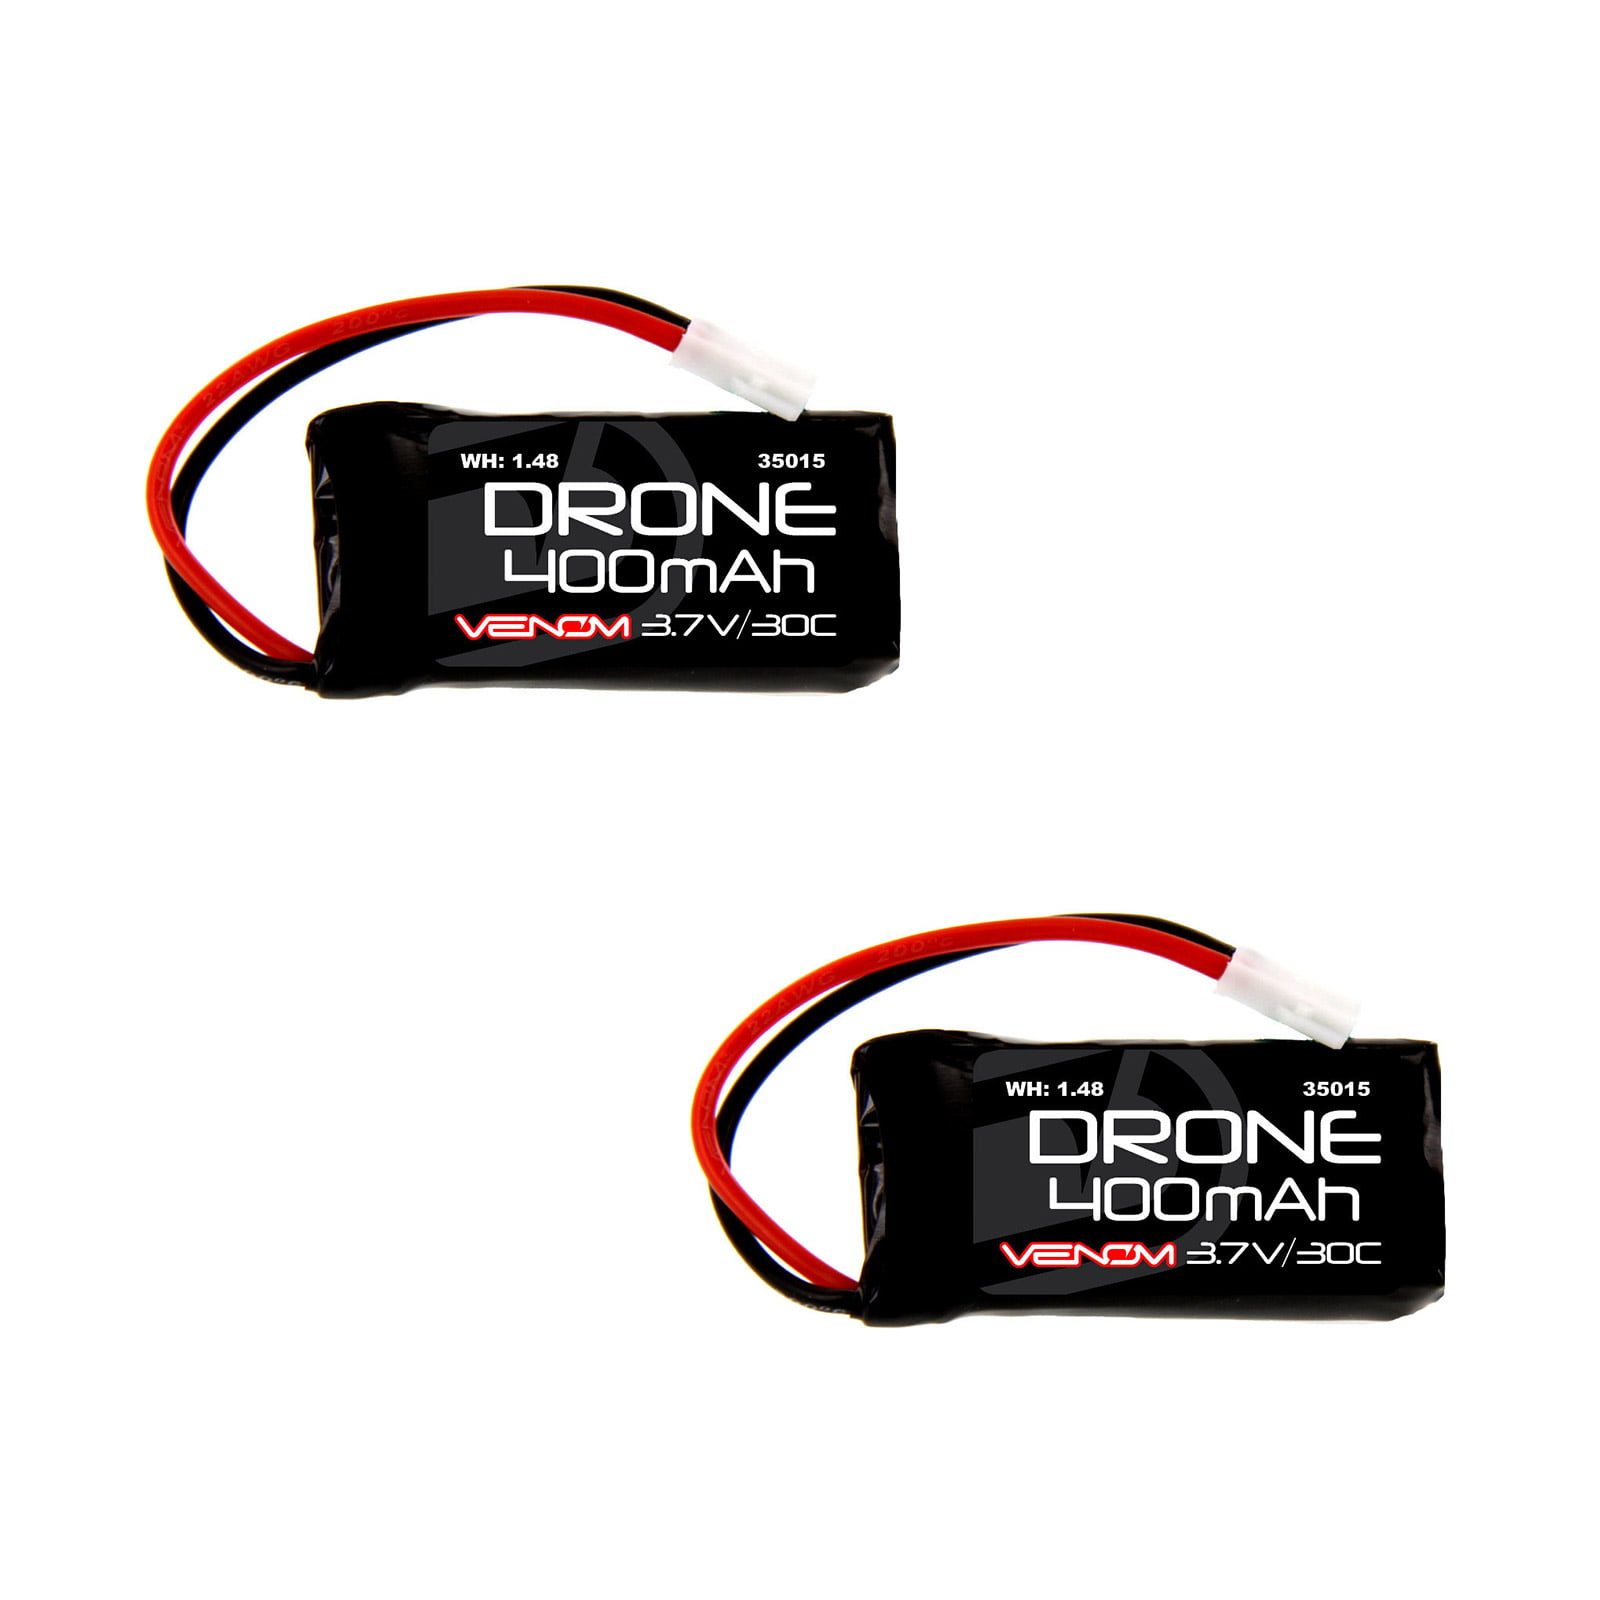 Venom 30C 1S 600mAh 3.7V LiPo Drone Battery with Micro Losi Plug x2 packs 